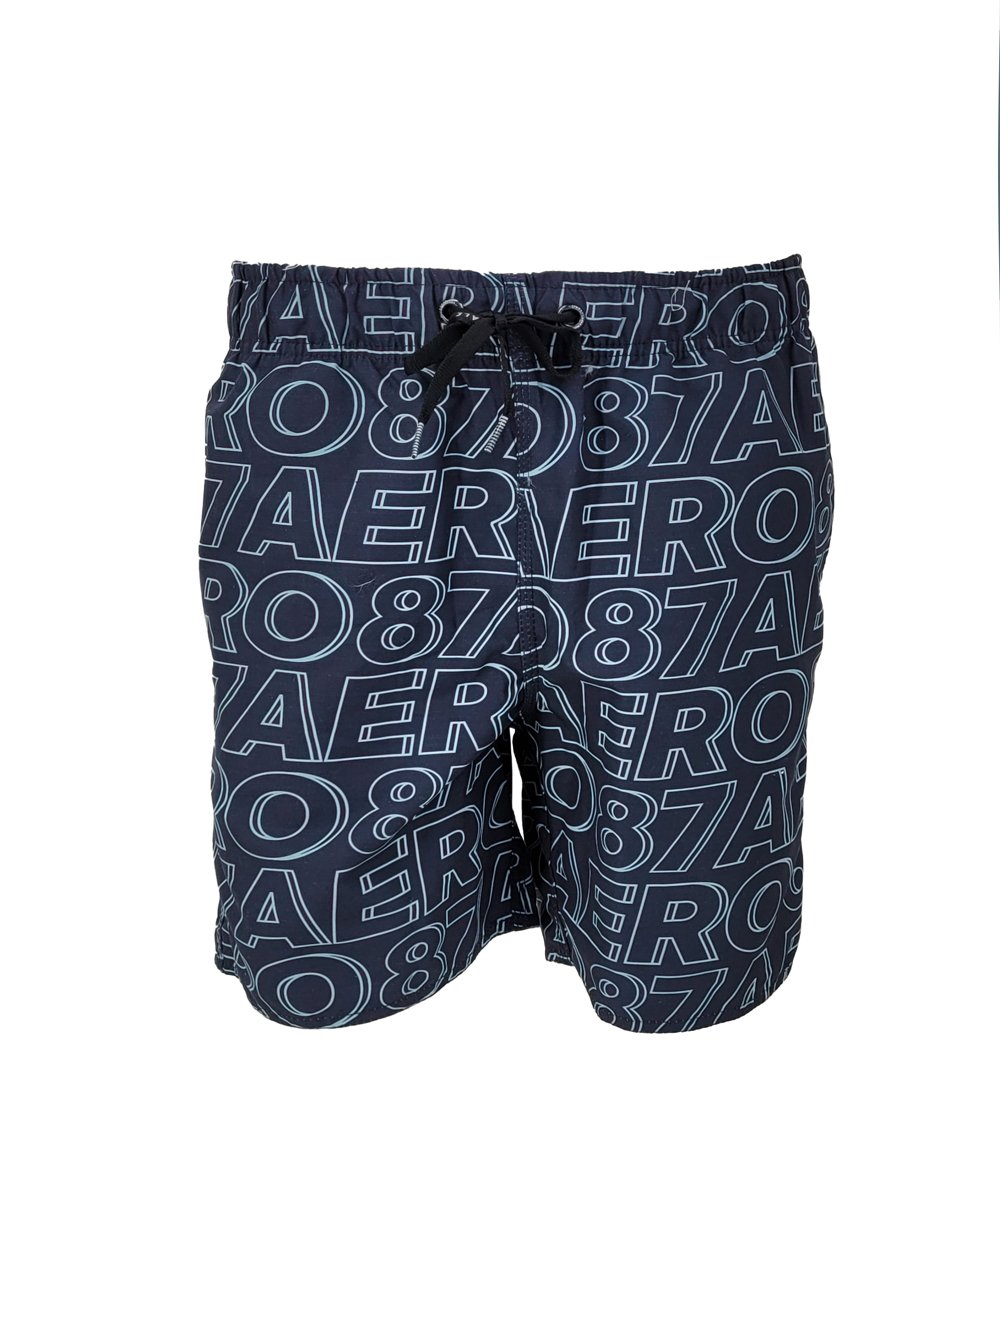 Short Aeropostale Masculino Swimwear Aero 87 Full Print Azul Marinho